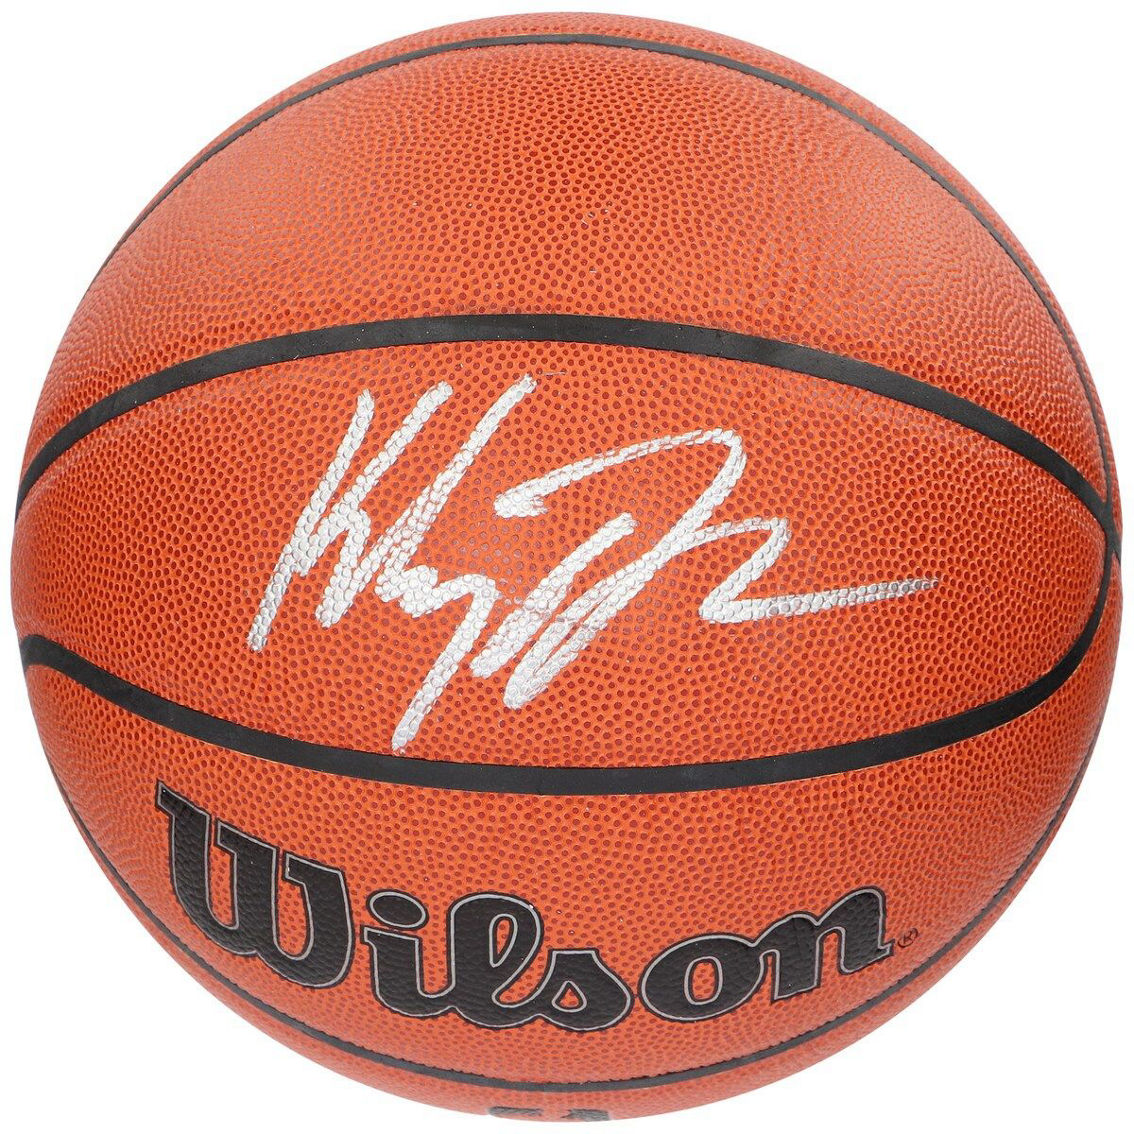 Fanatics Authentic Klay Thompson Golden State Warriors Autographed Wilson Indoor/Outdoor Basketball - Image 2 of 3